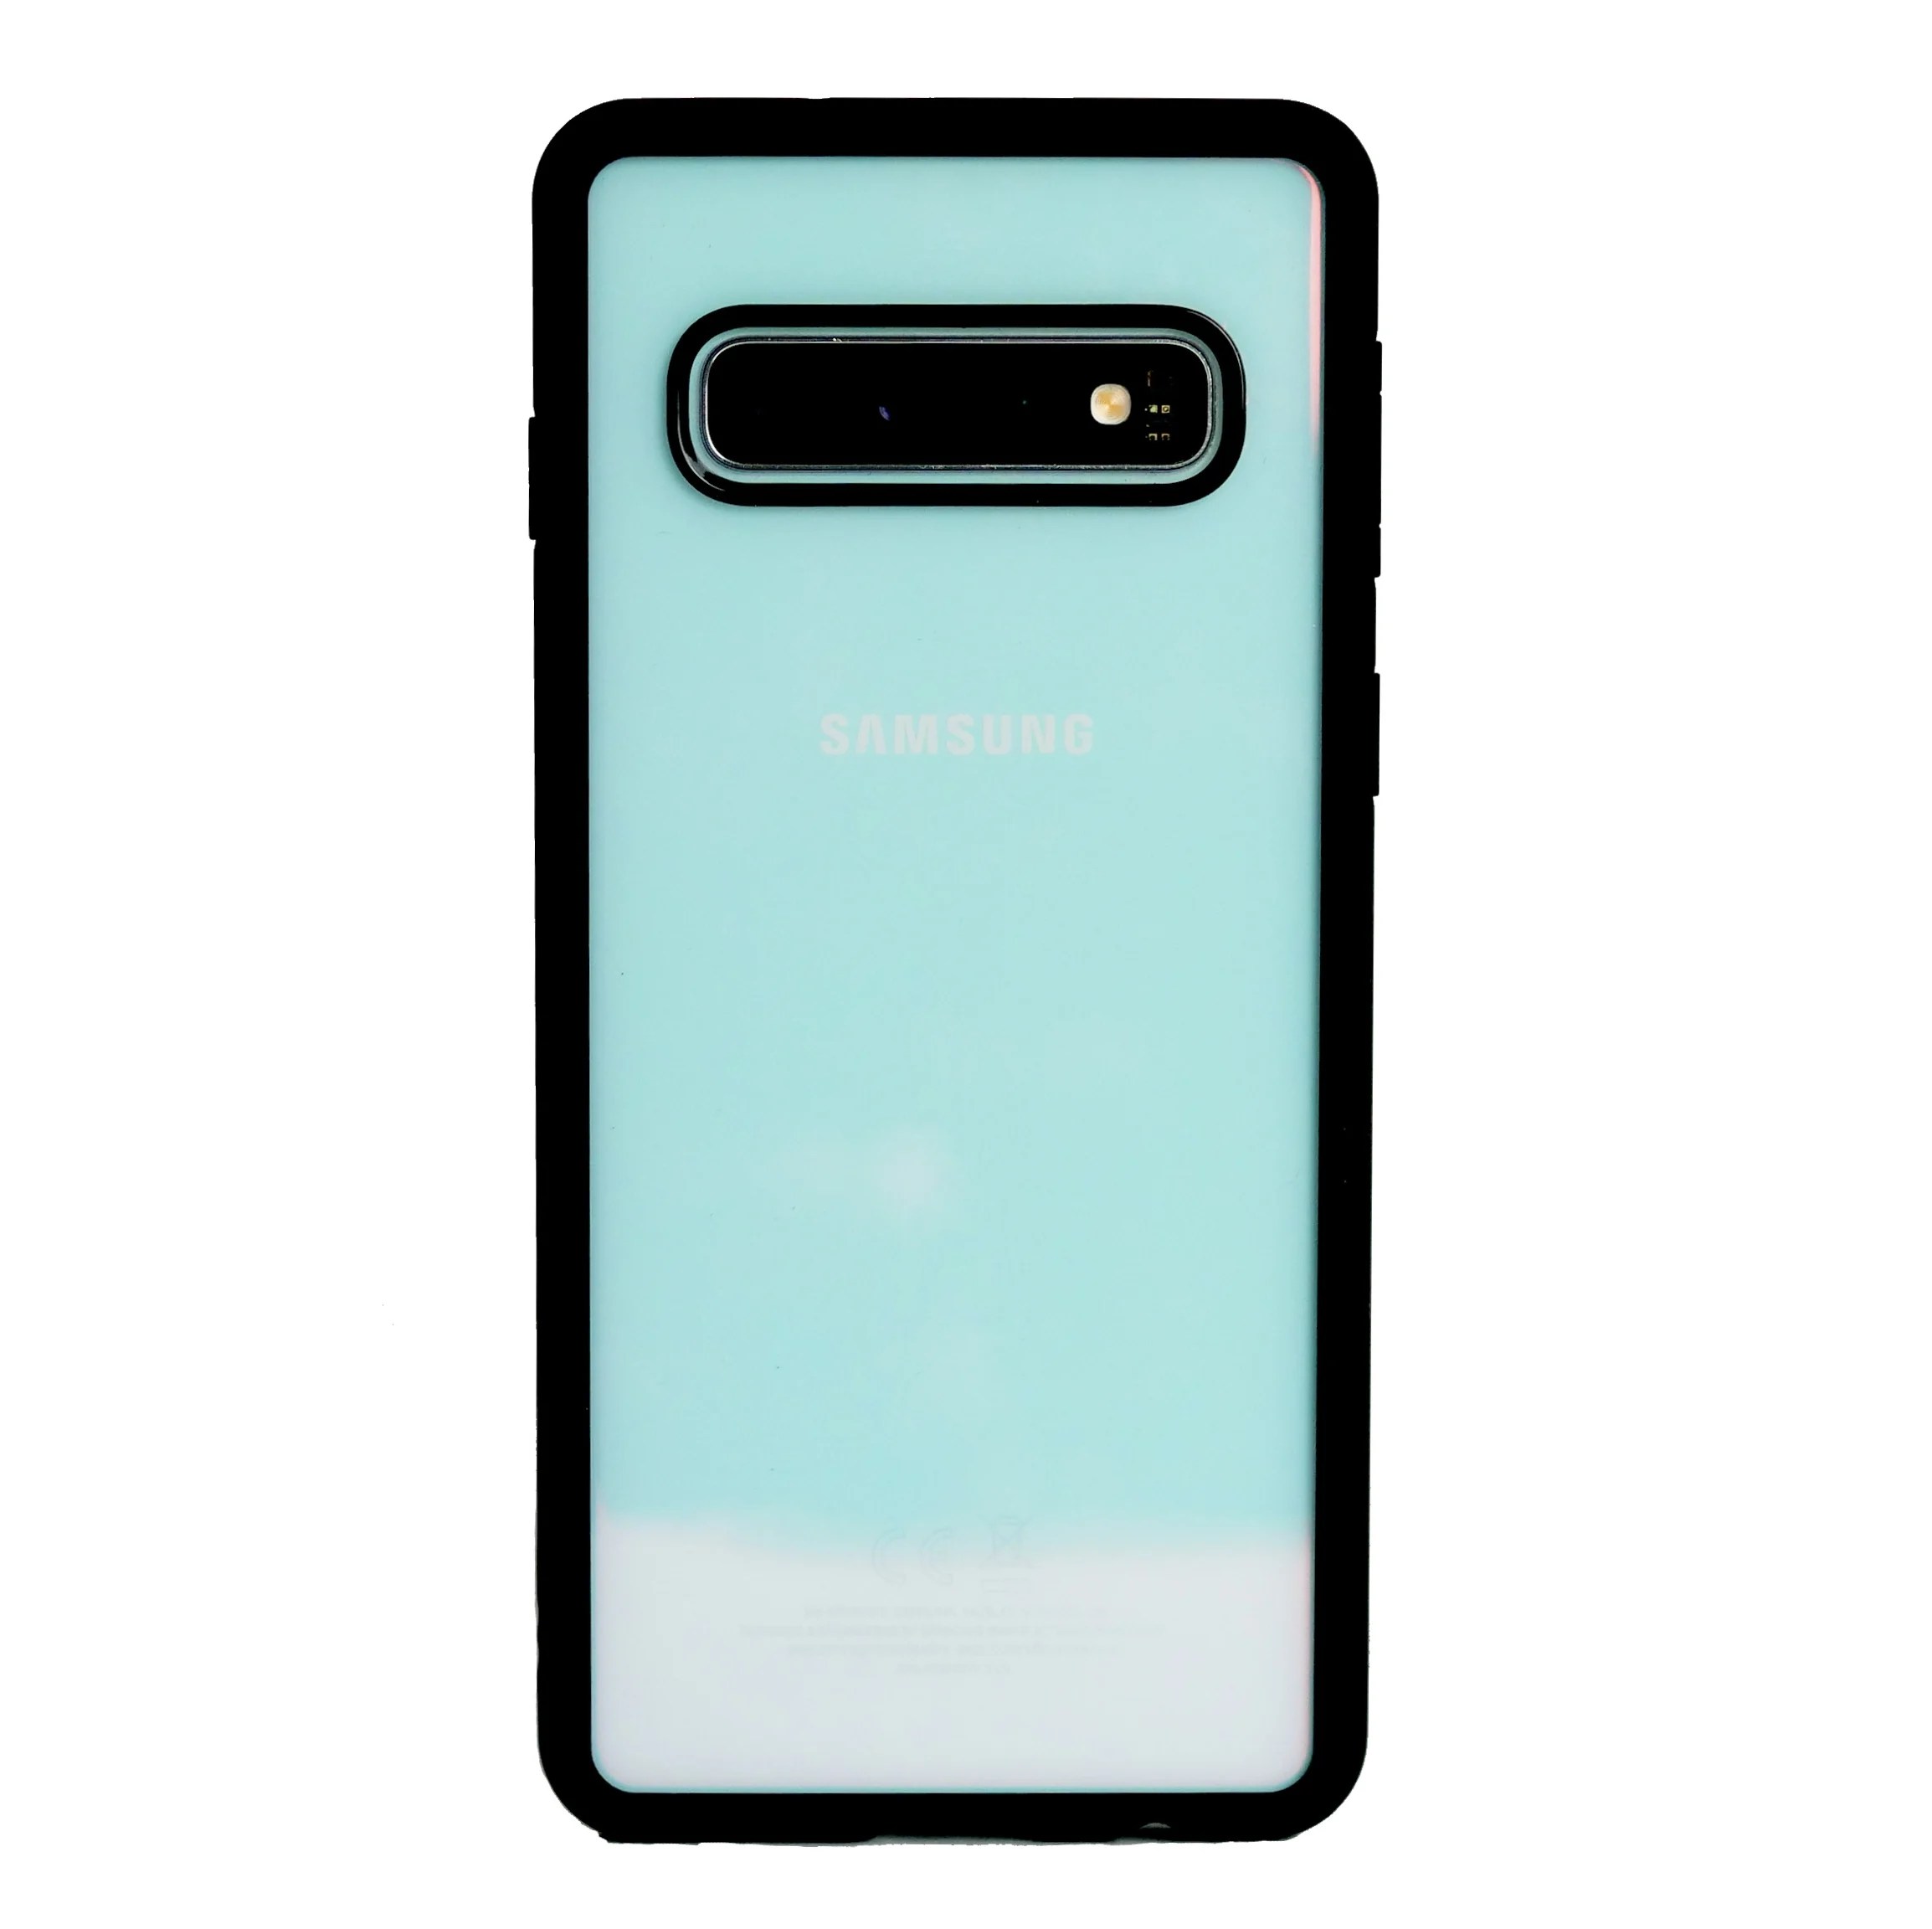 Hpory Coque de protection en silicone pour Samsung Galaxy S10 à 360° Noir